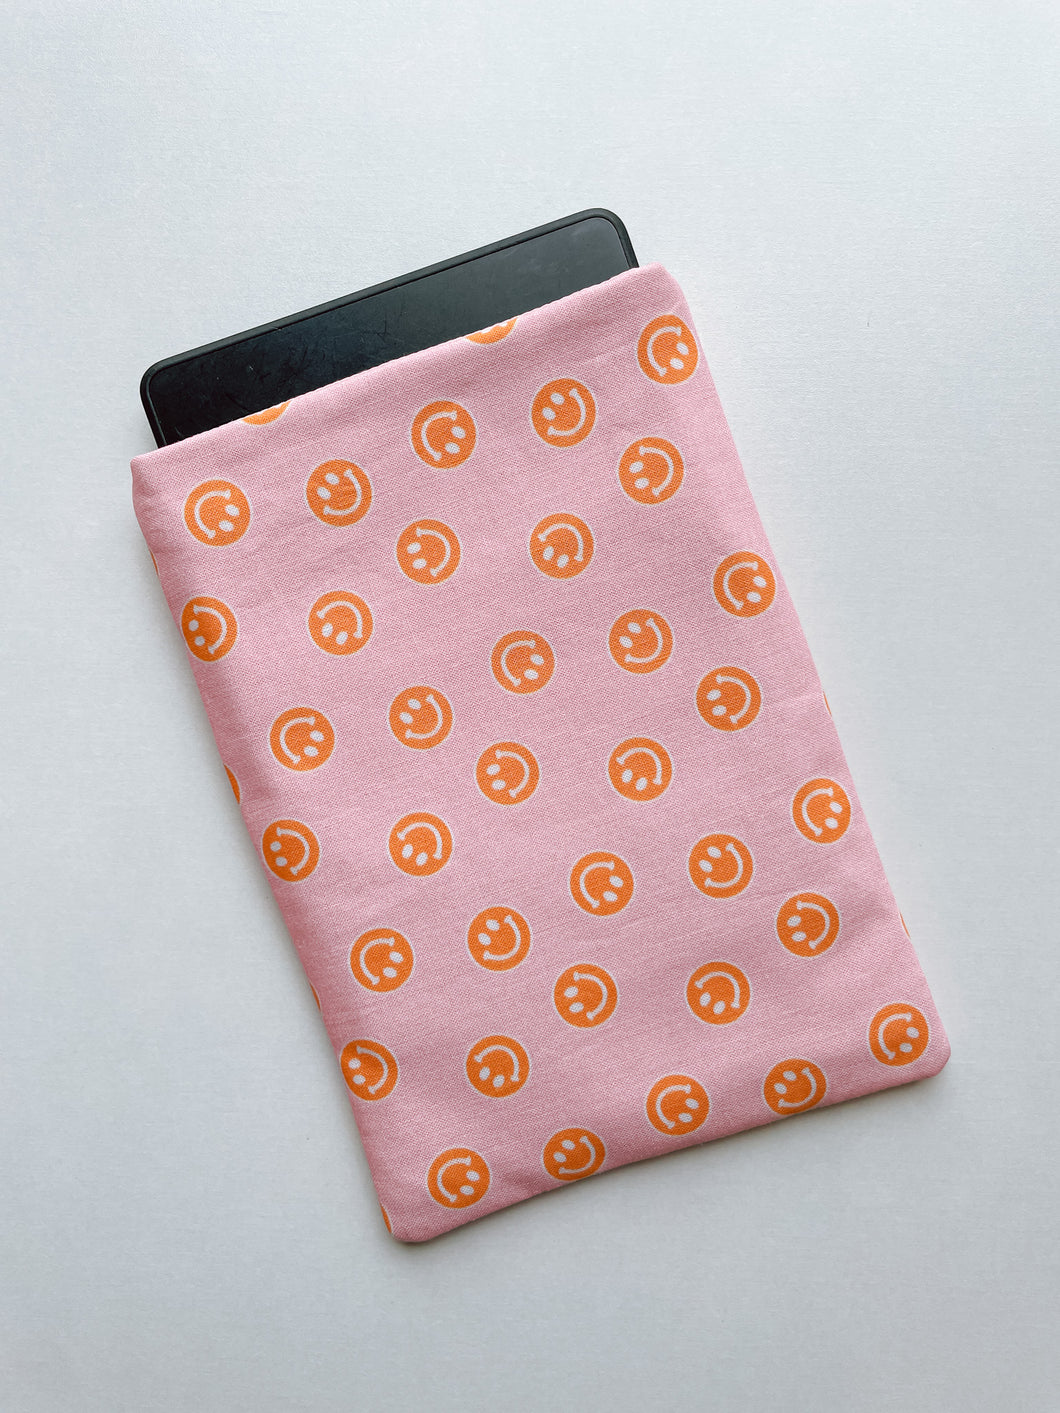 Kindle sleeve - pink & orange smileys